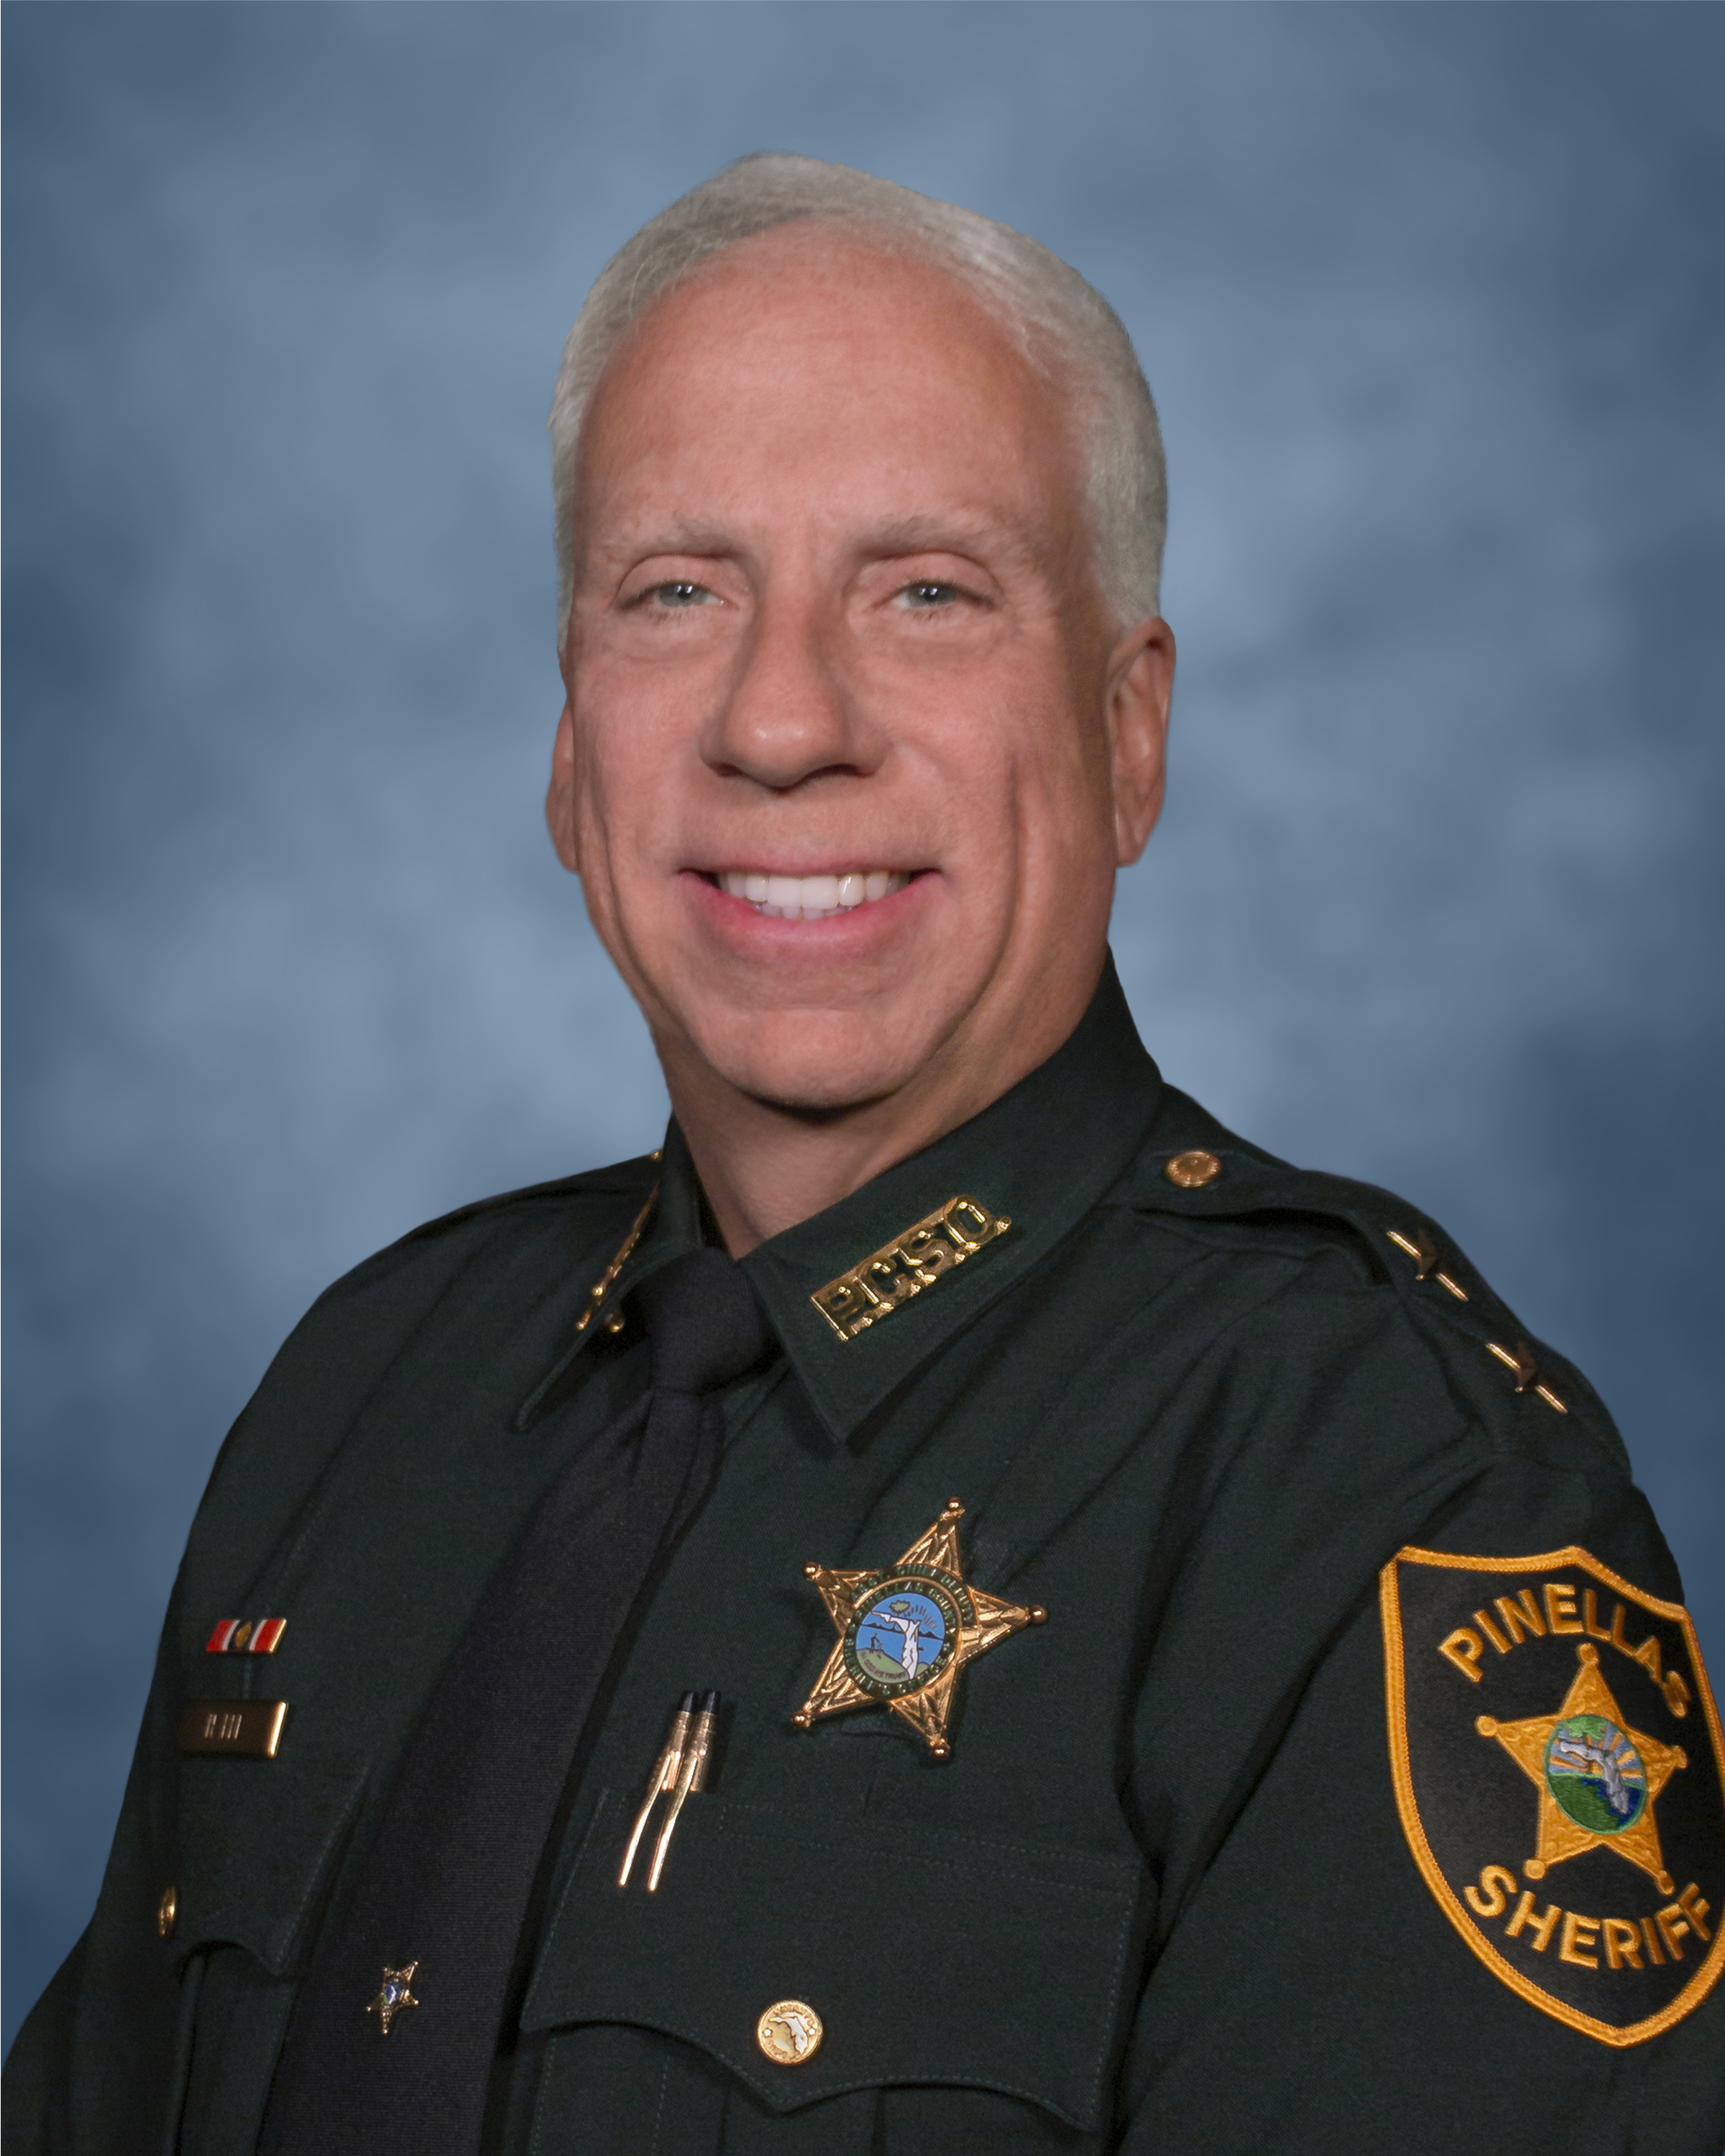 Chief Deputy Paul Halle